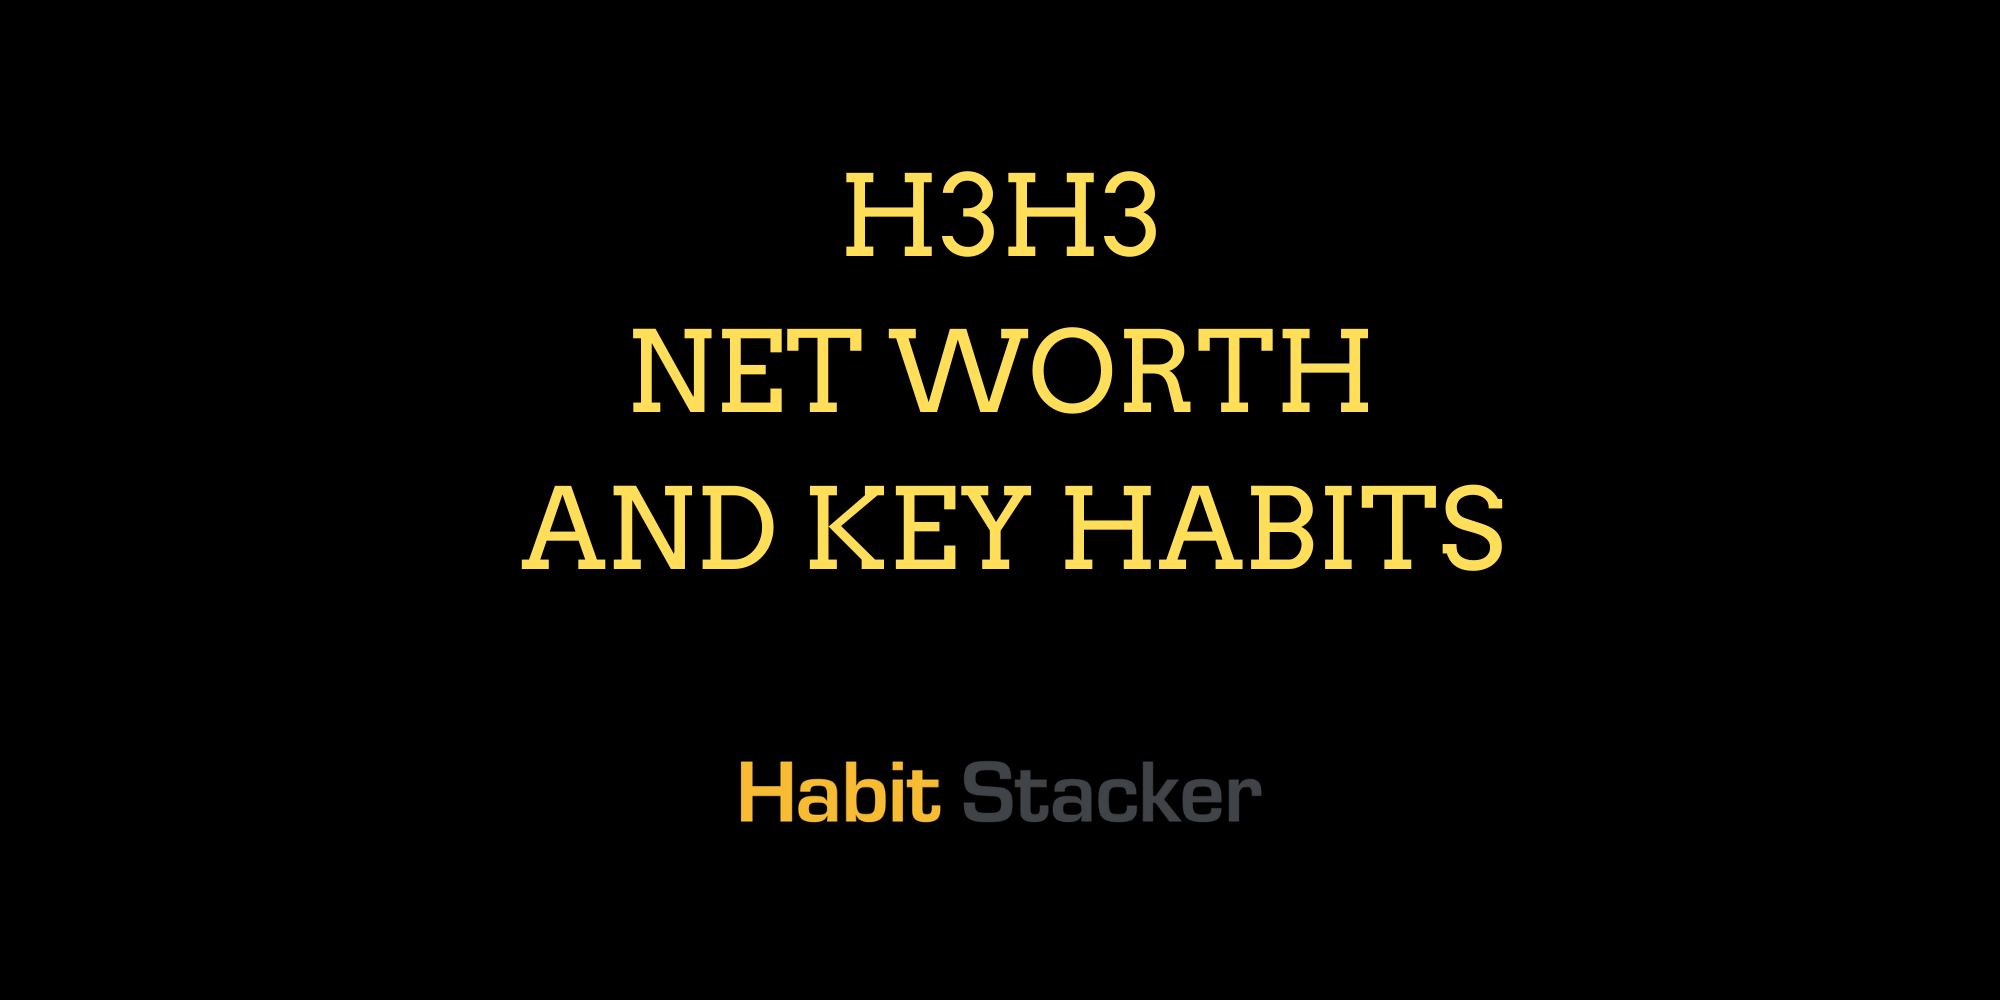 H3H3 Net Worth and Key Habits